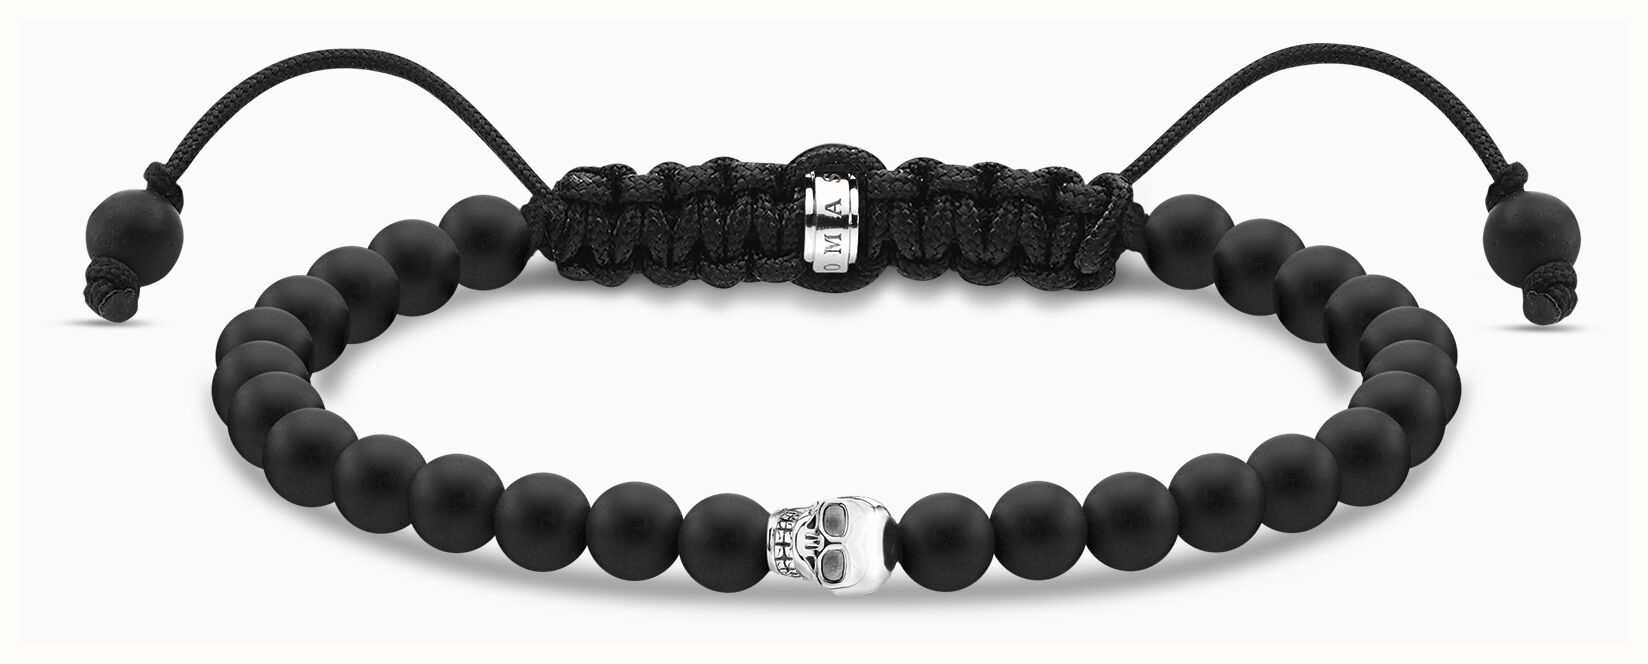 JANEYACY Brand 2017 Black Genuine Leather Skeleton Skull Charm Bracelet Men  Gift Punk Rock Jewelry Stainless